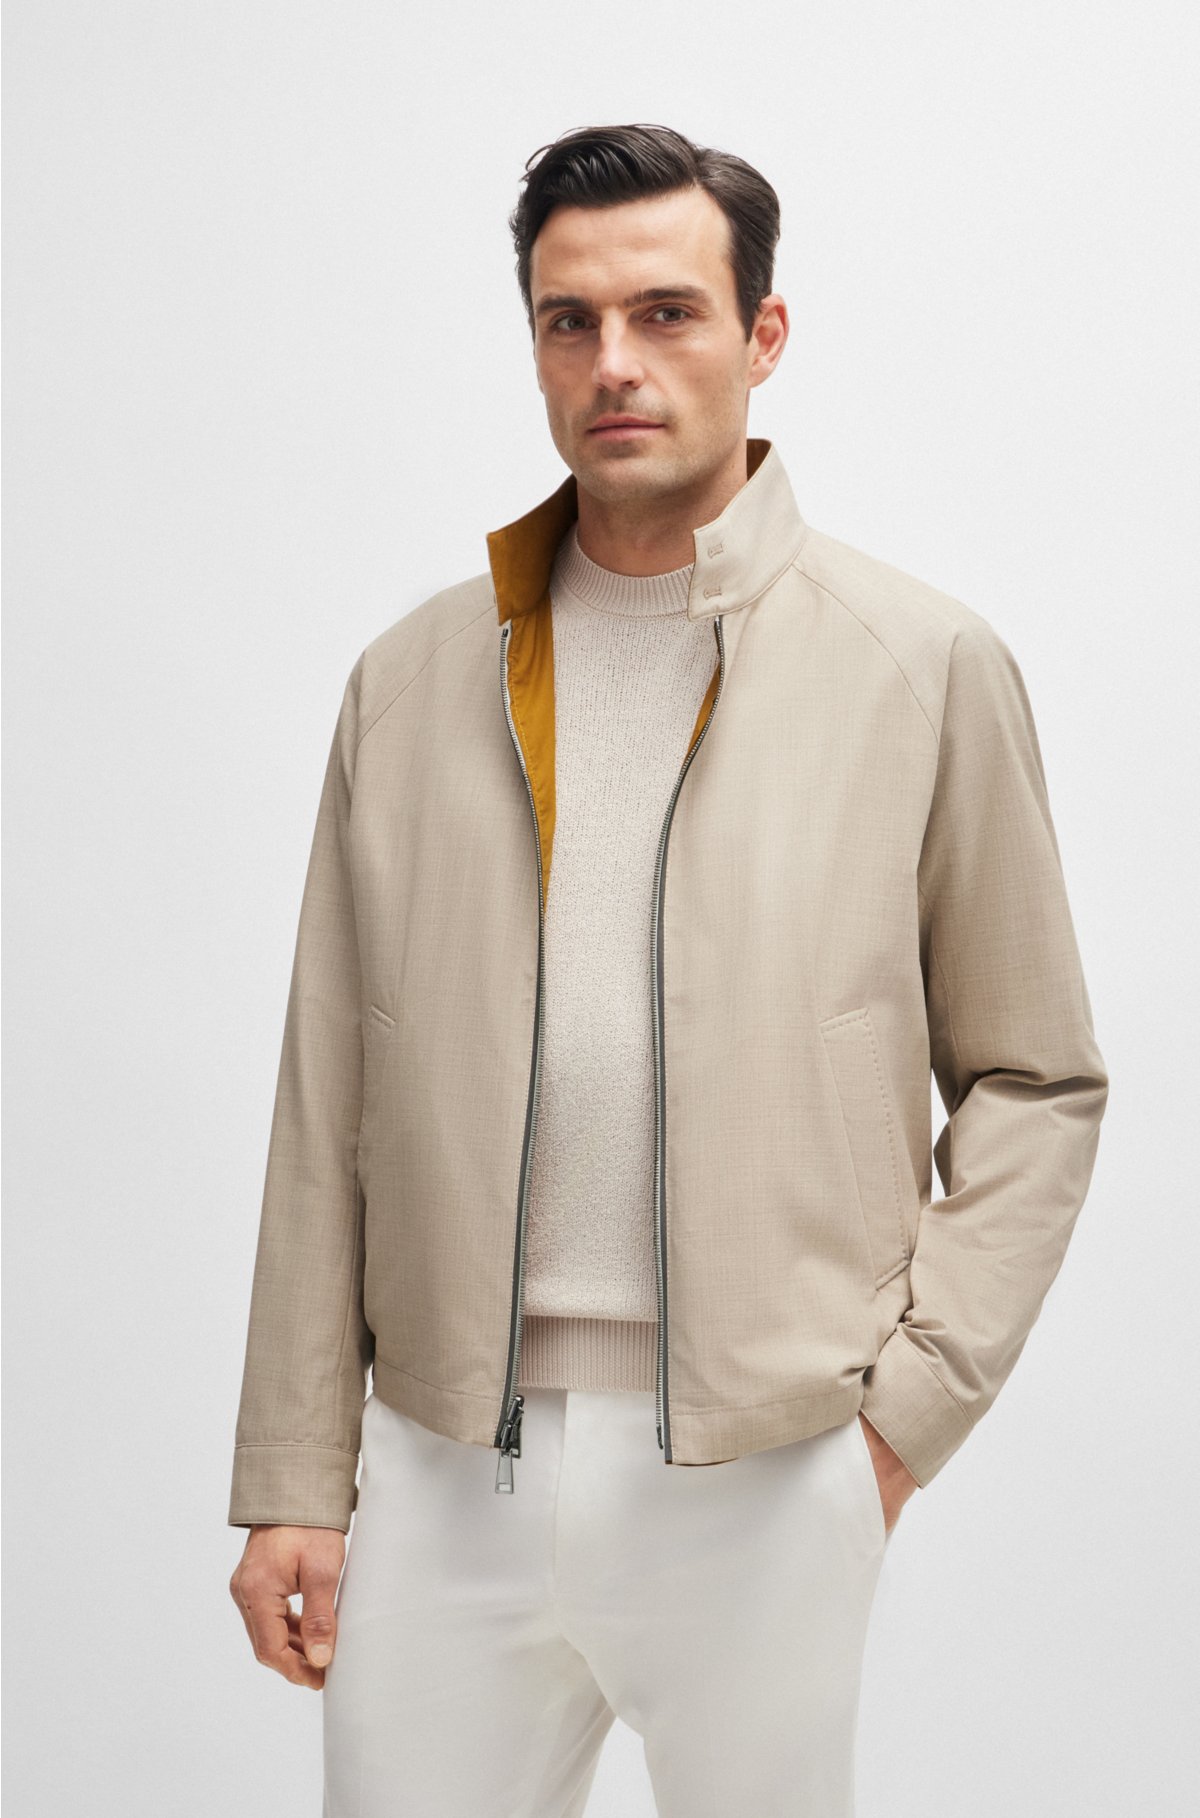 Reversible Harrington jacket in virgin wool and silk, Light Beige